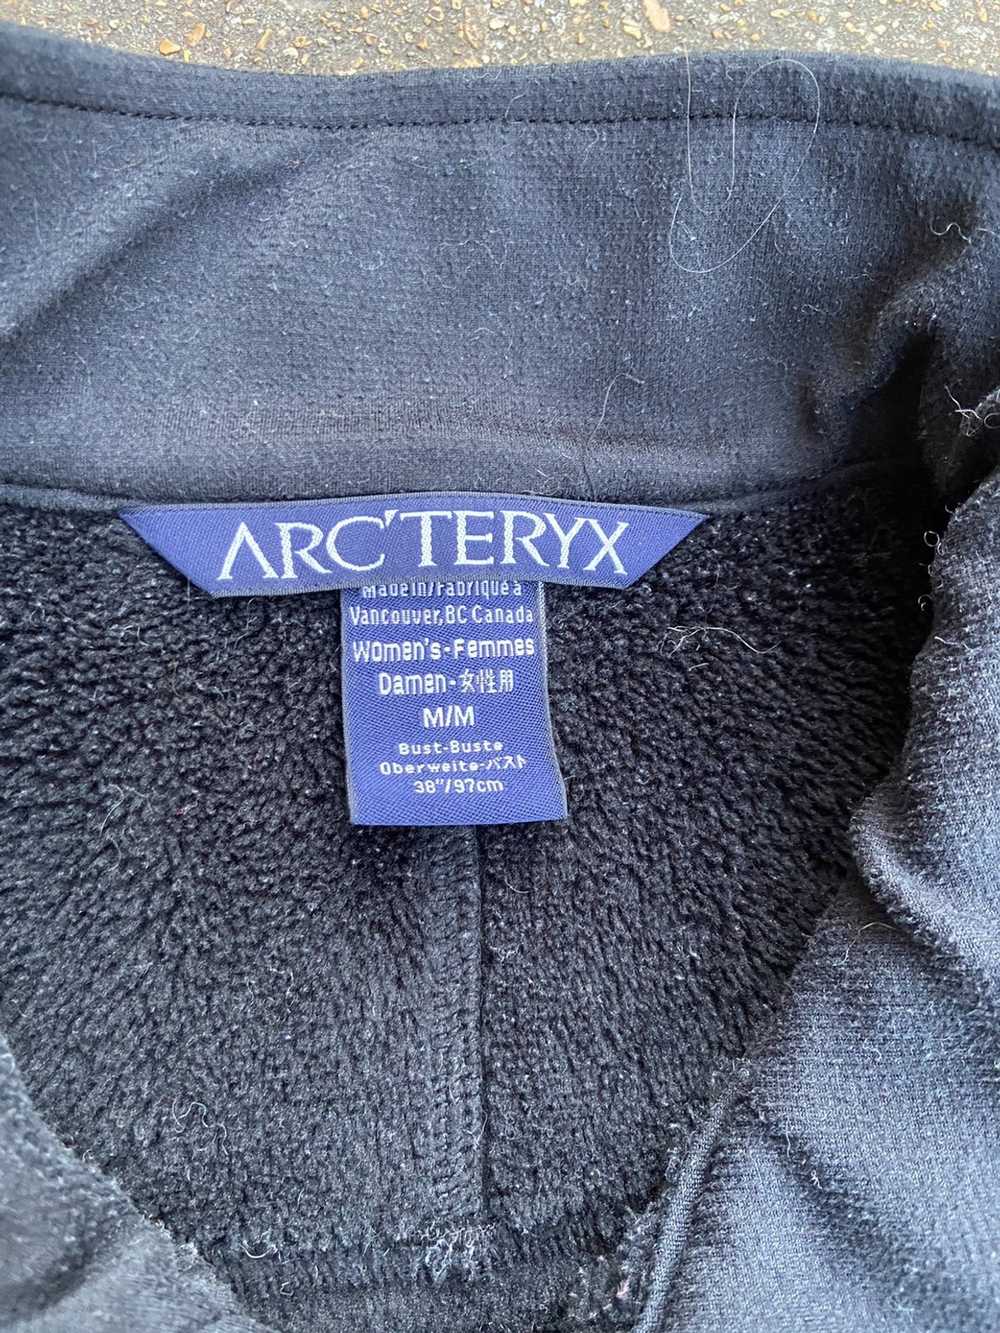 Arc'Teryx Women’s Fur Lined Arcteryx Jacket - image 3